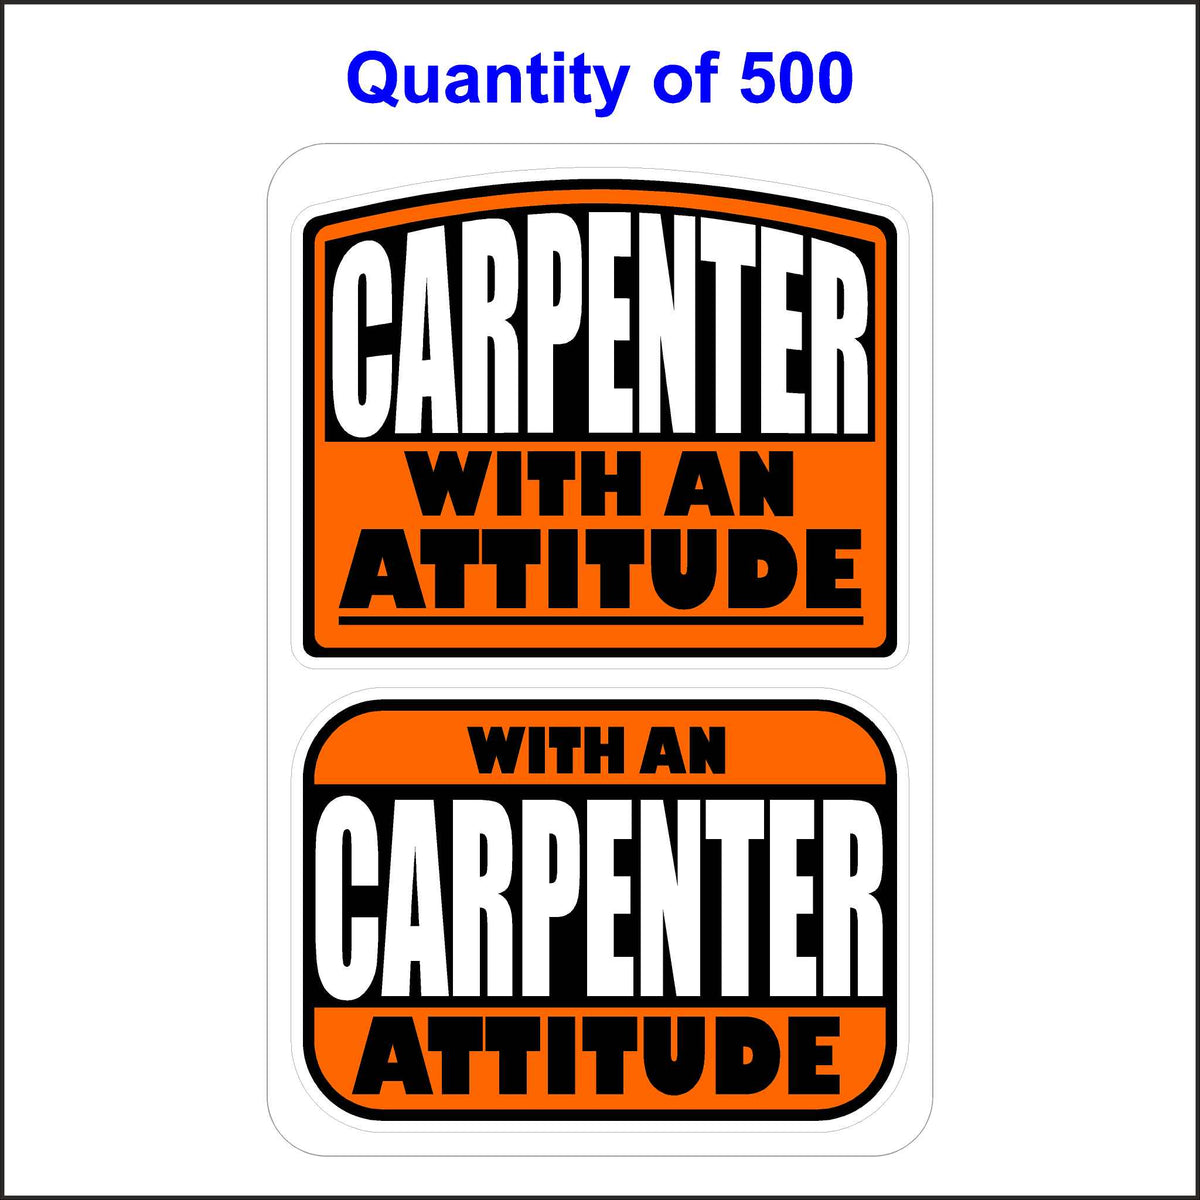 Carpenter With an Attitude Stickers 500 Quantity.